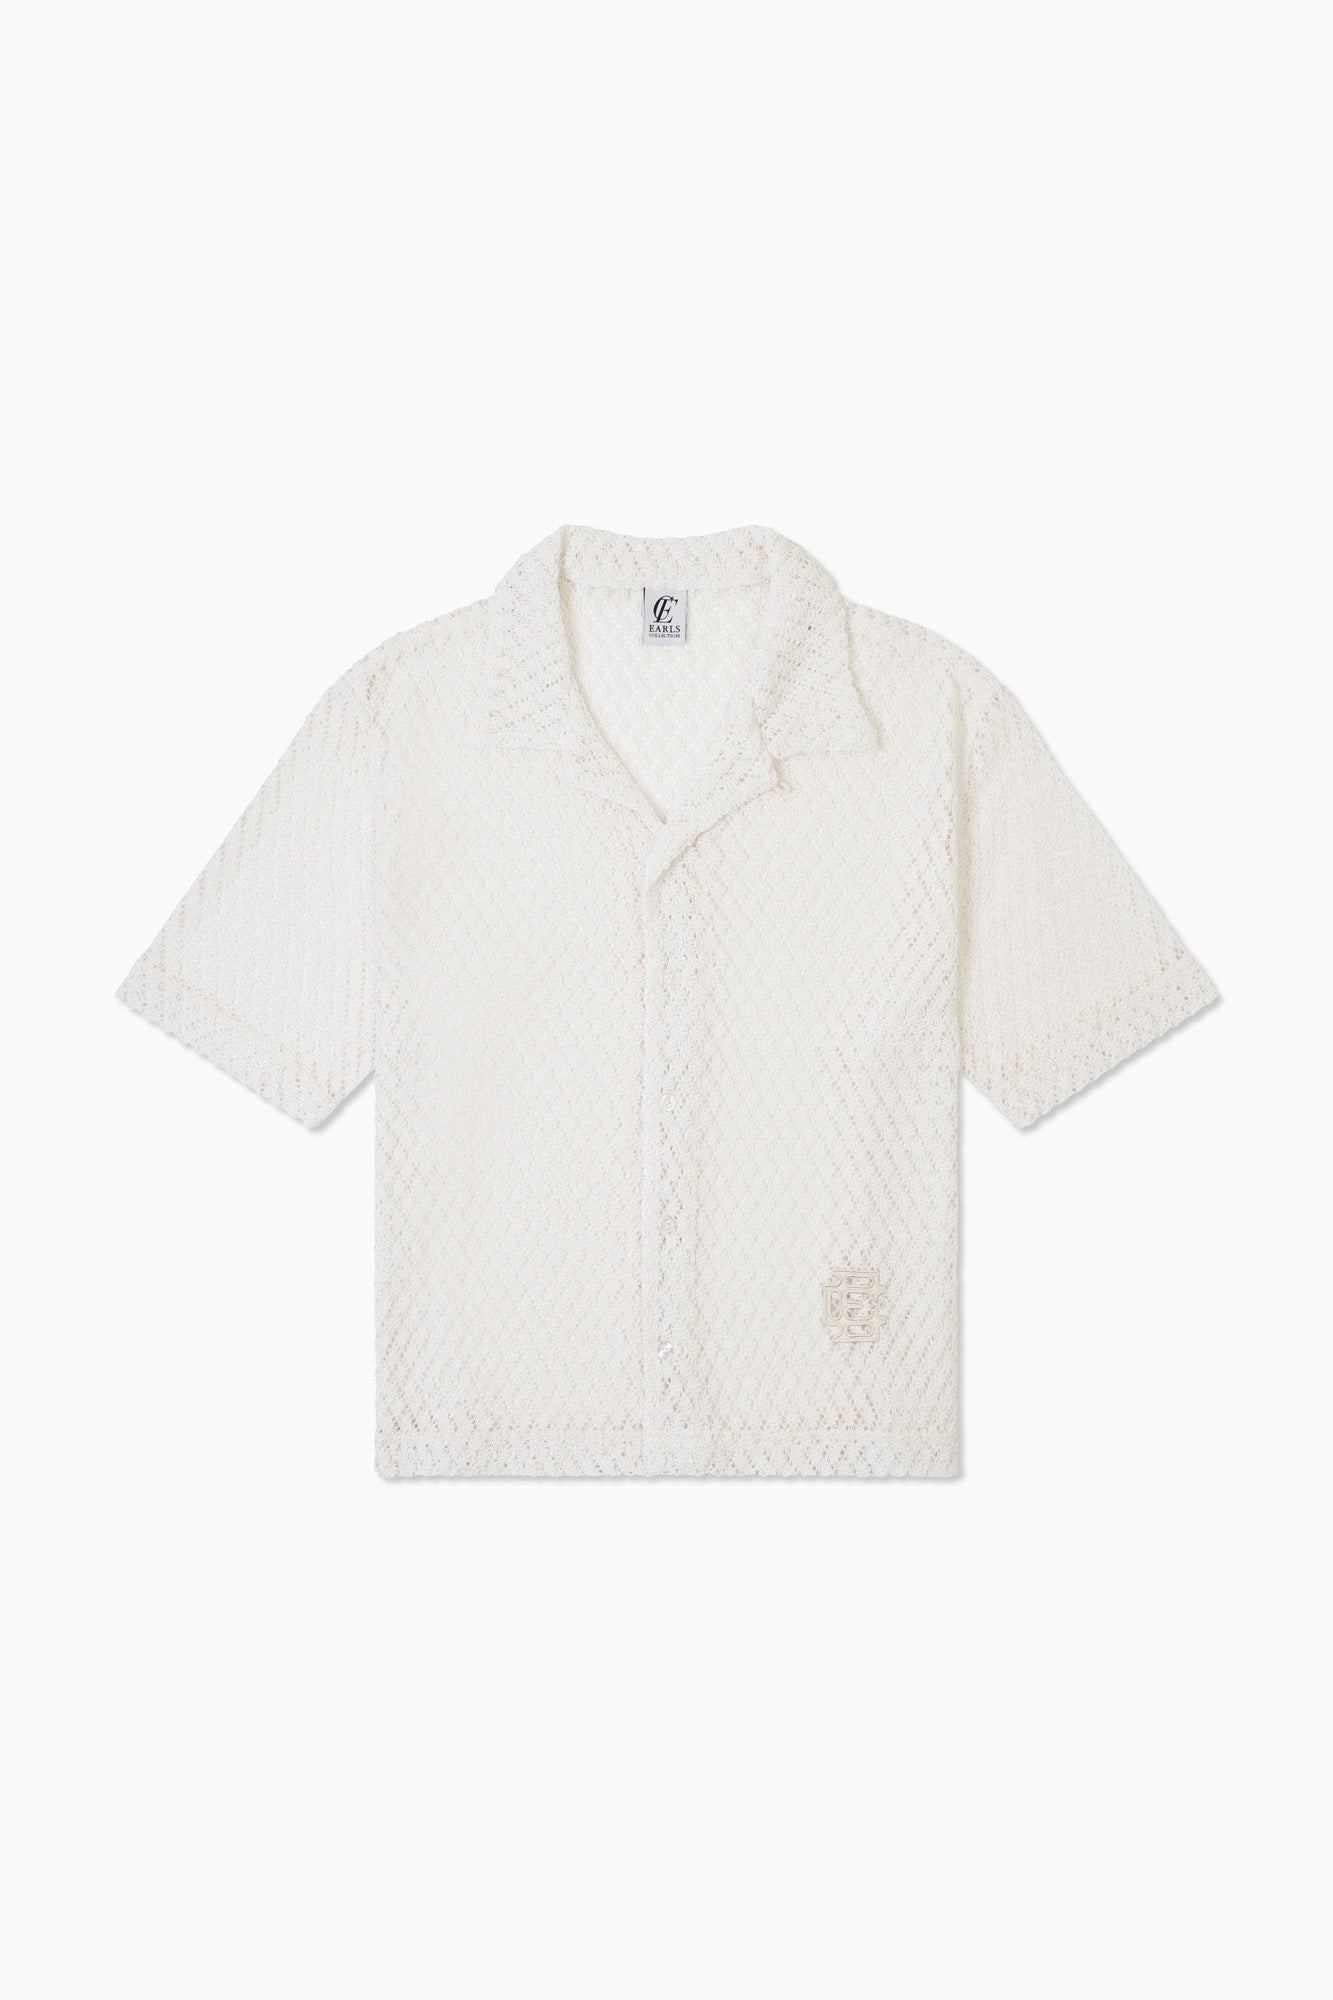 Vineyard Shirt- White